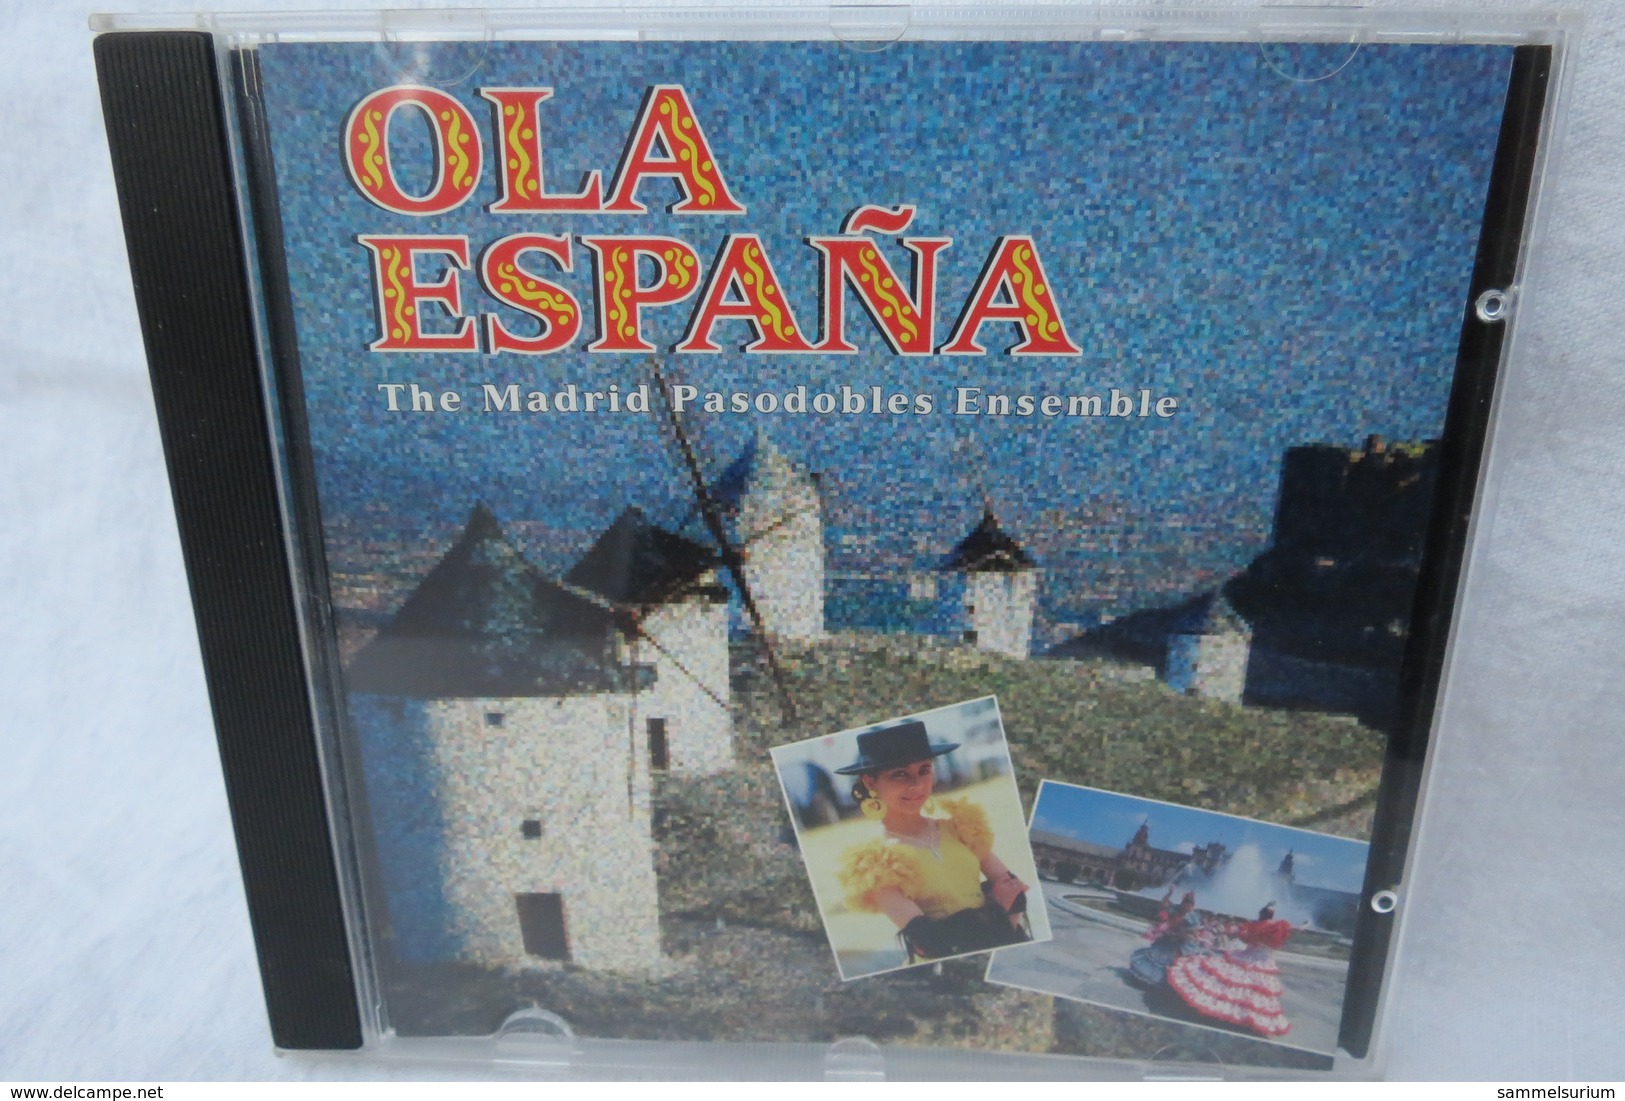 CD "The Madrid Pasodobles Ensemble" Ola Espana - Other - Spanish Music